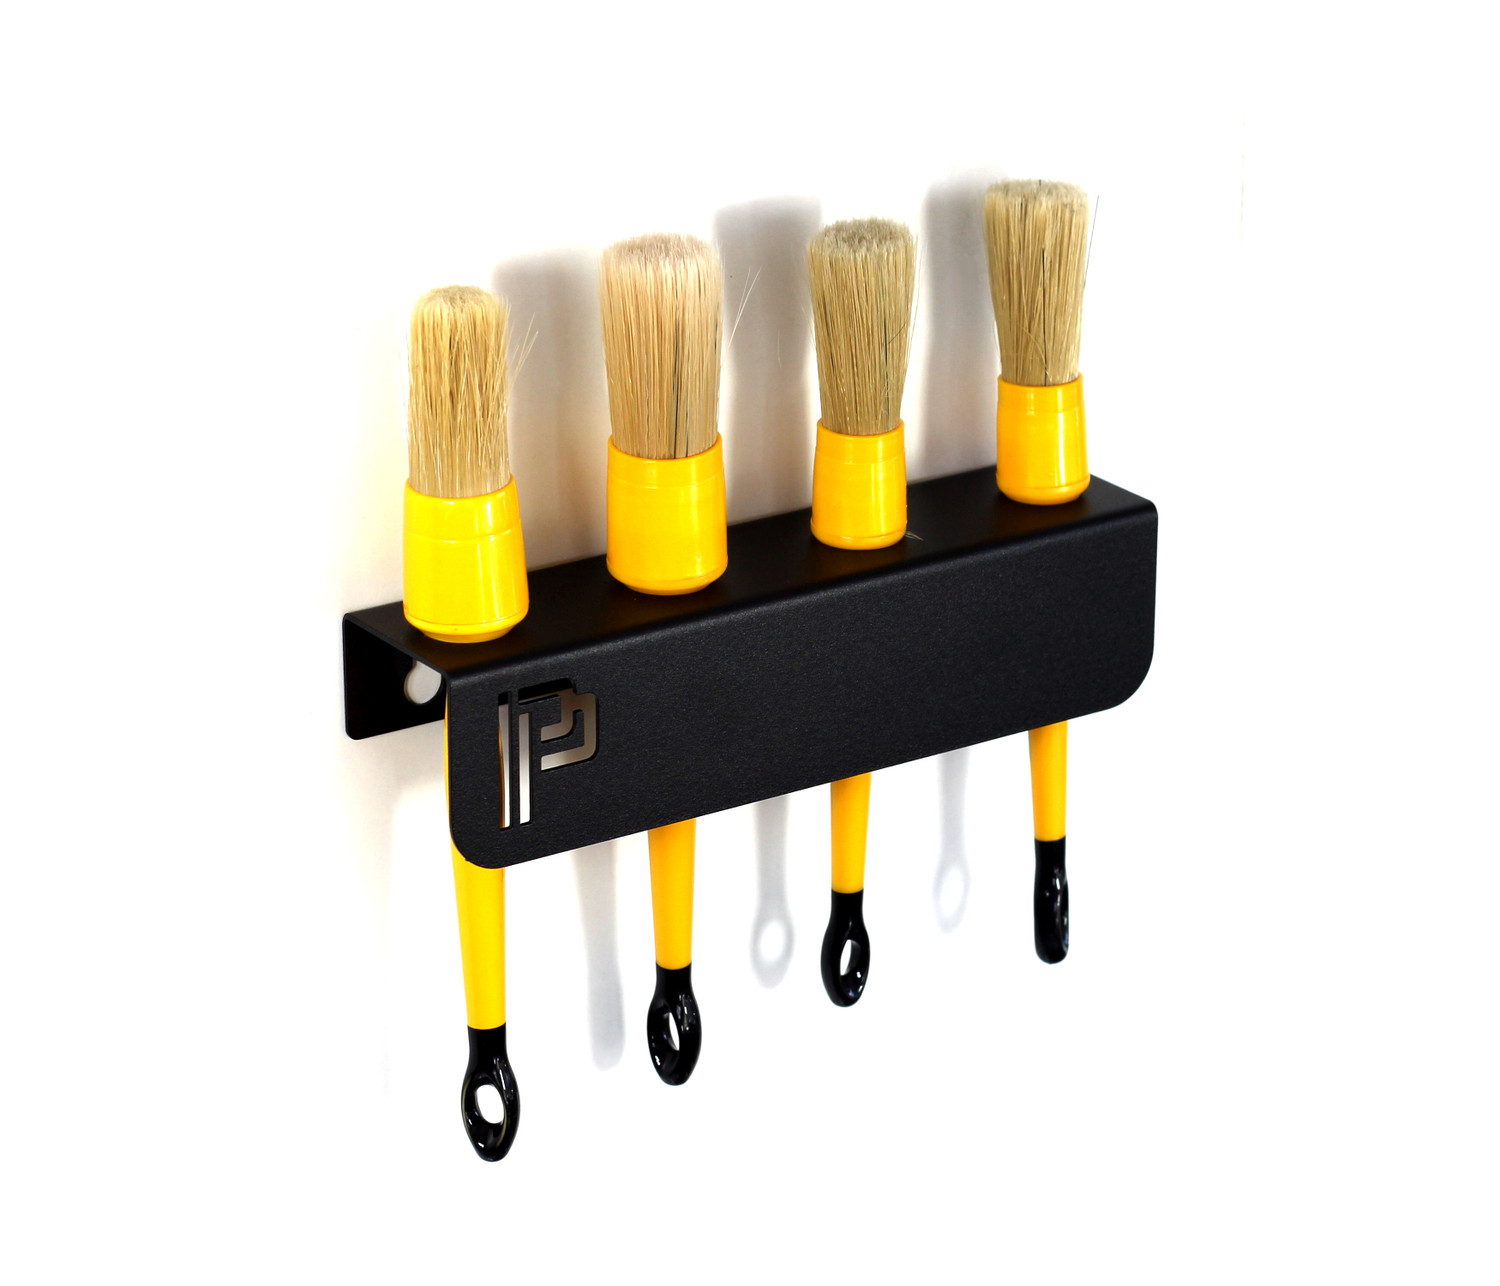 buy brush Holder plastic rectangular wholesale and retail in the store